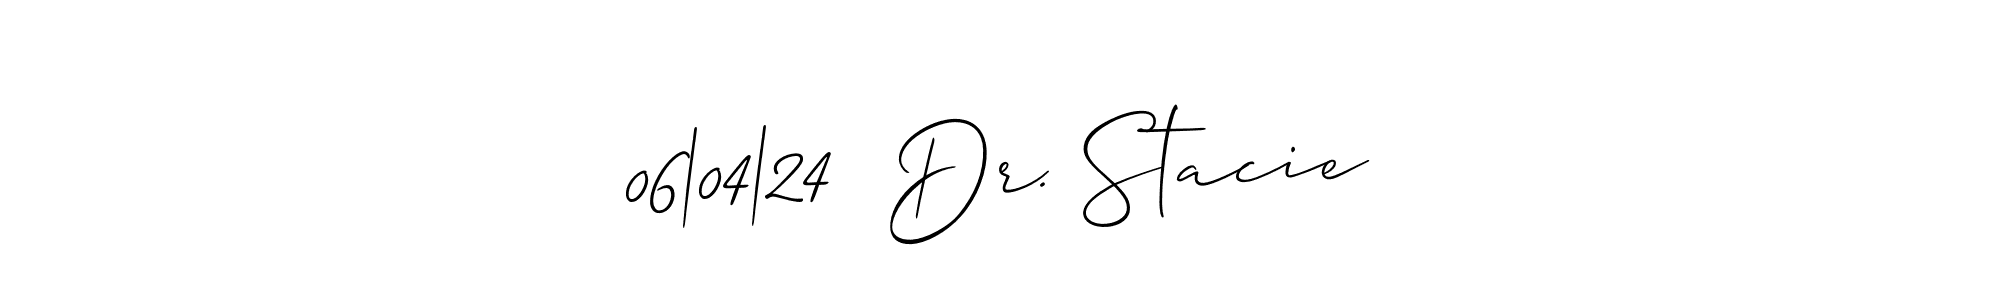 06|04|24  Dr. Stacie stylish signature style. Best Handwritten Sign (Allison_Script) for my name. Handwritten Signature Collection Ideas for my name 06|04|24  Dr. Stacie. 06|04|24  Dr. Stacie signature style 2 images and pictures png